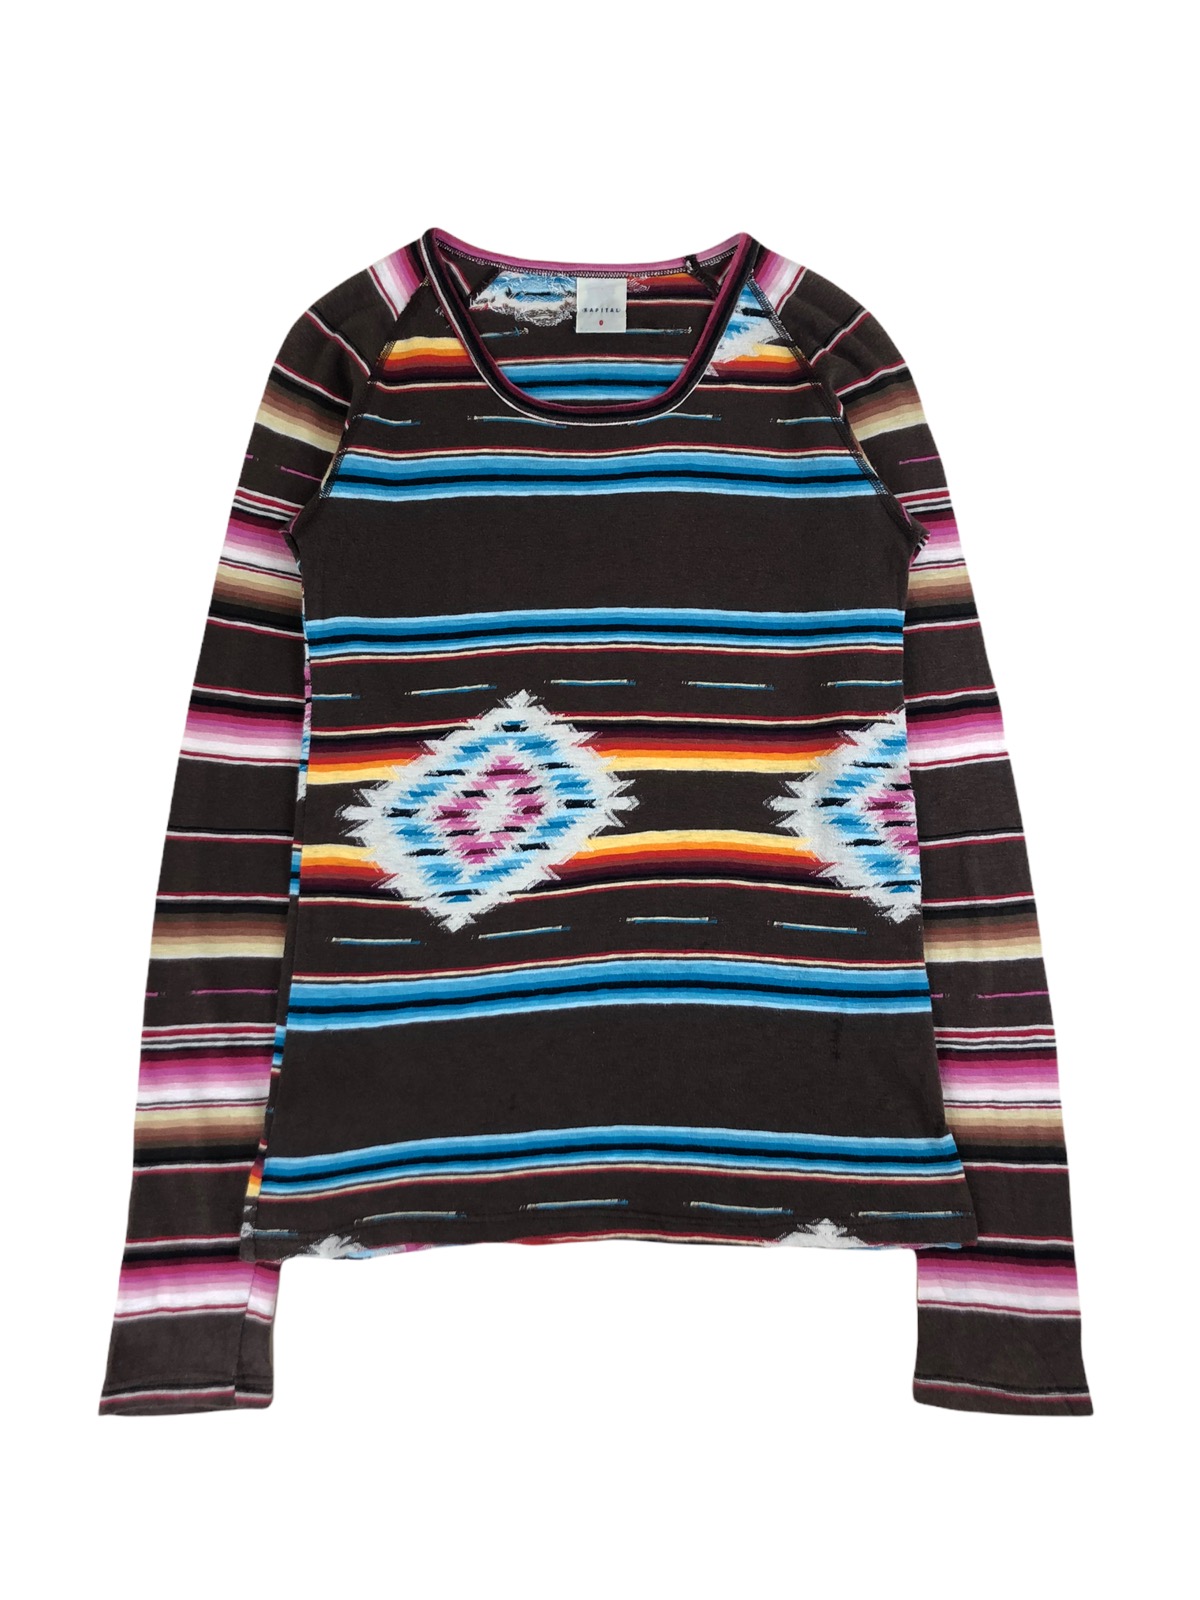 Vintage Kapital Aztec motif Cotton Knit Tshirt - 1